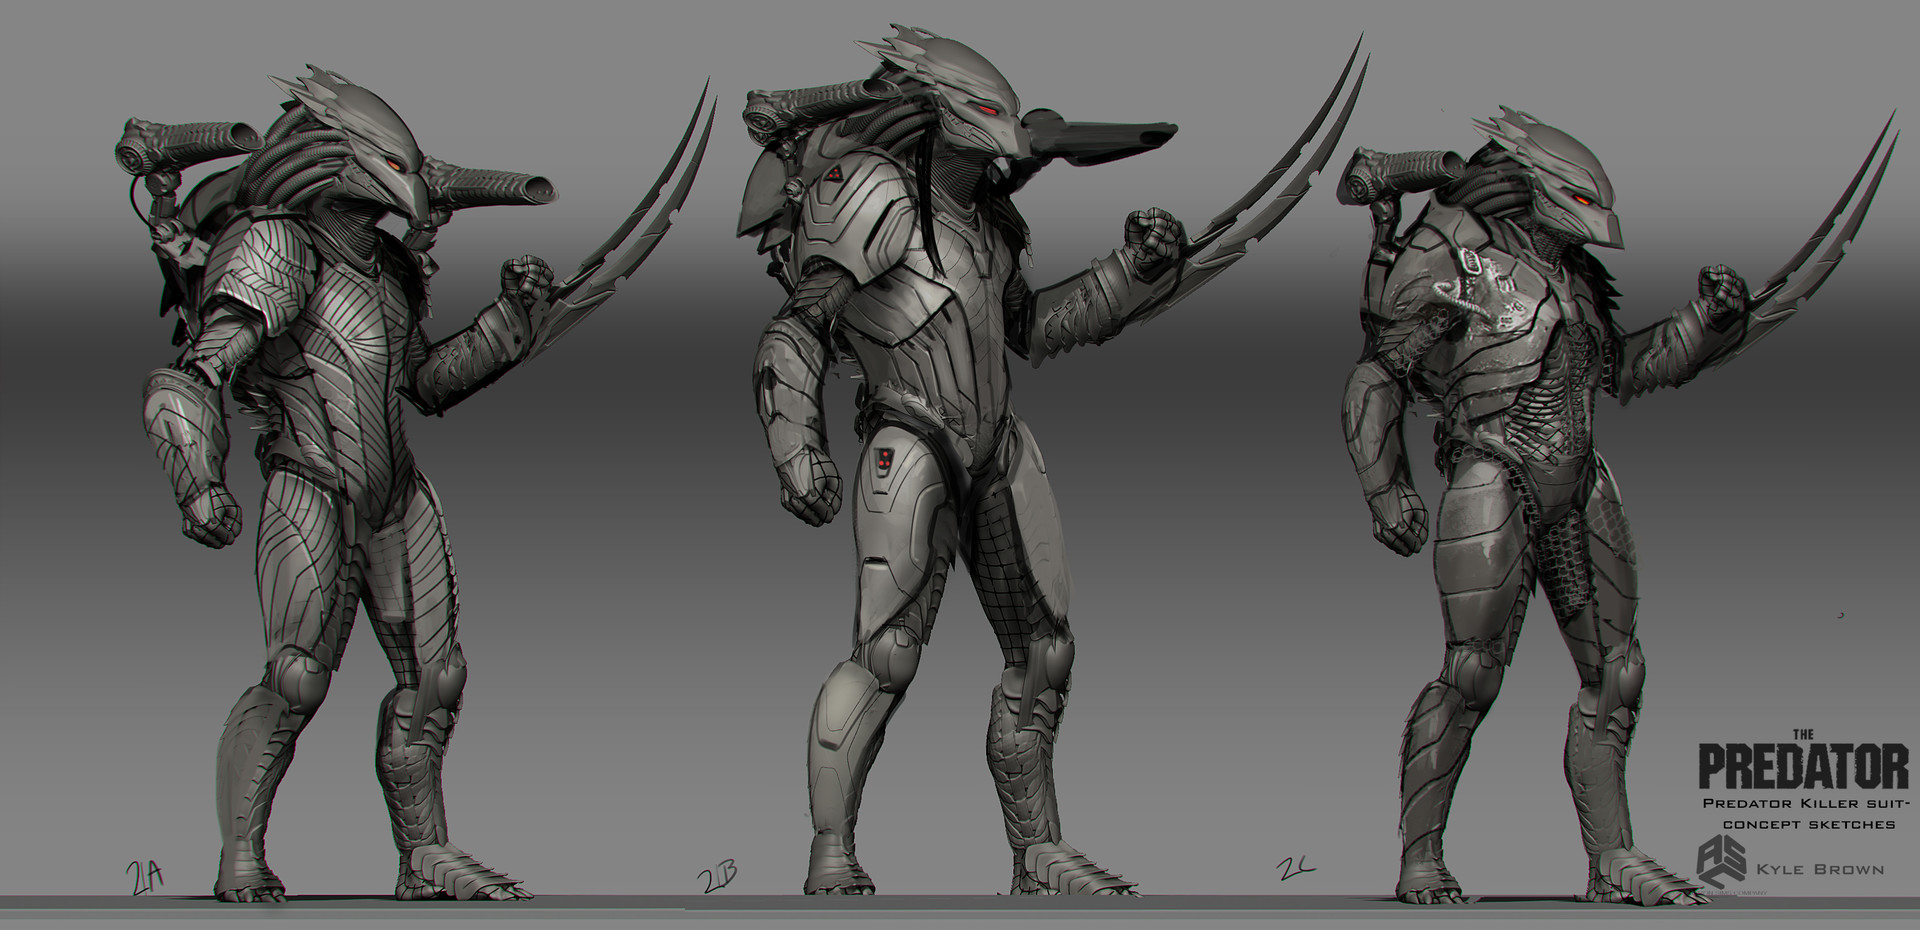 Kyle Brown Shares New Predator Killer Concept Art! 